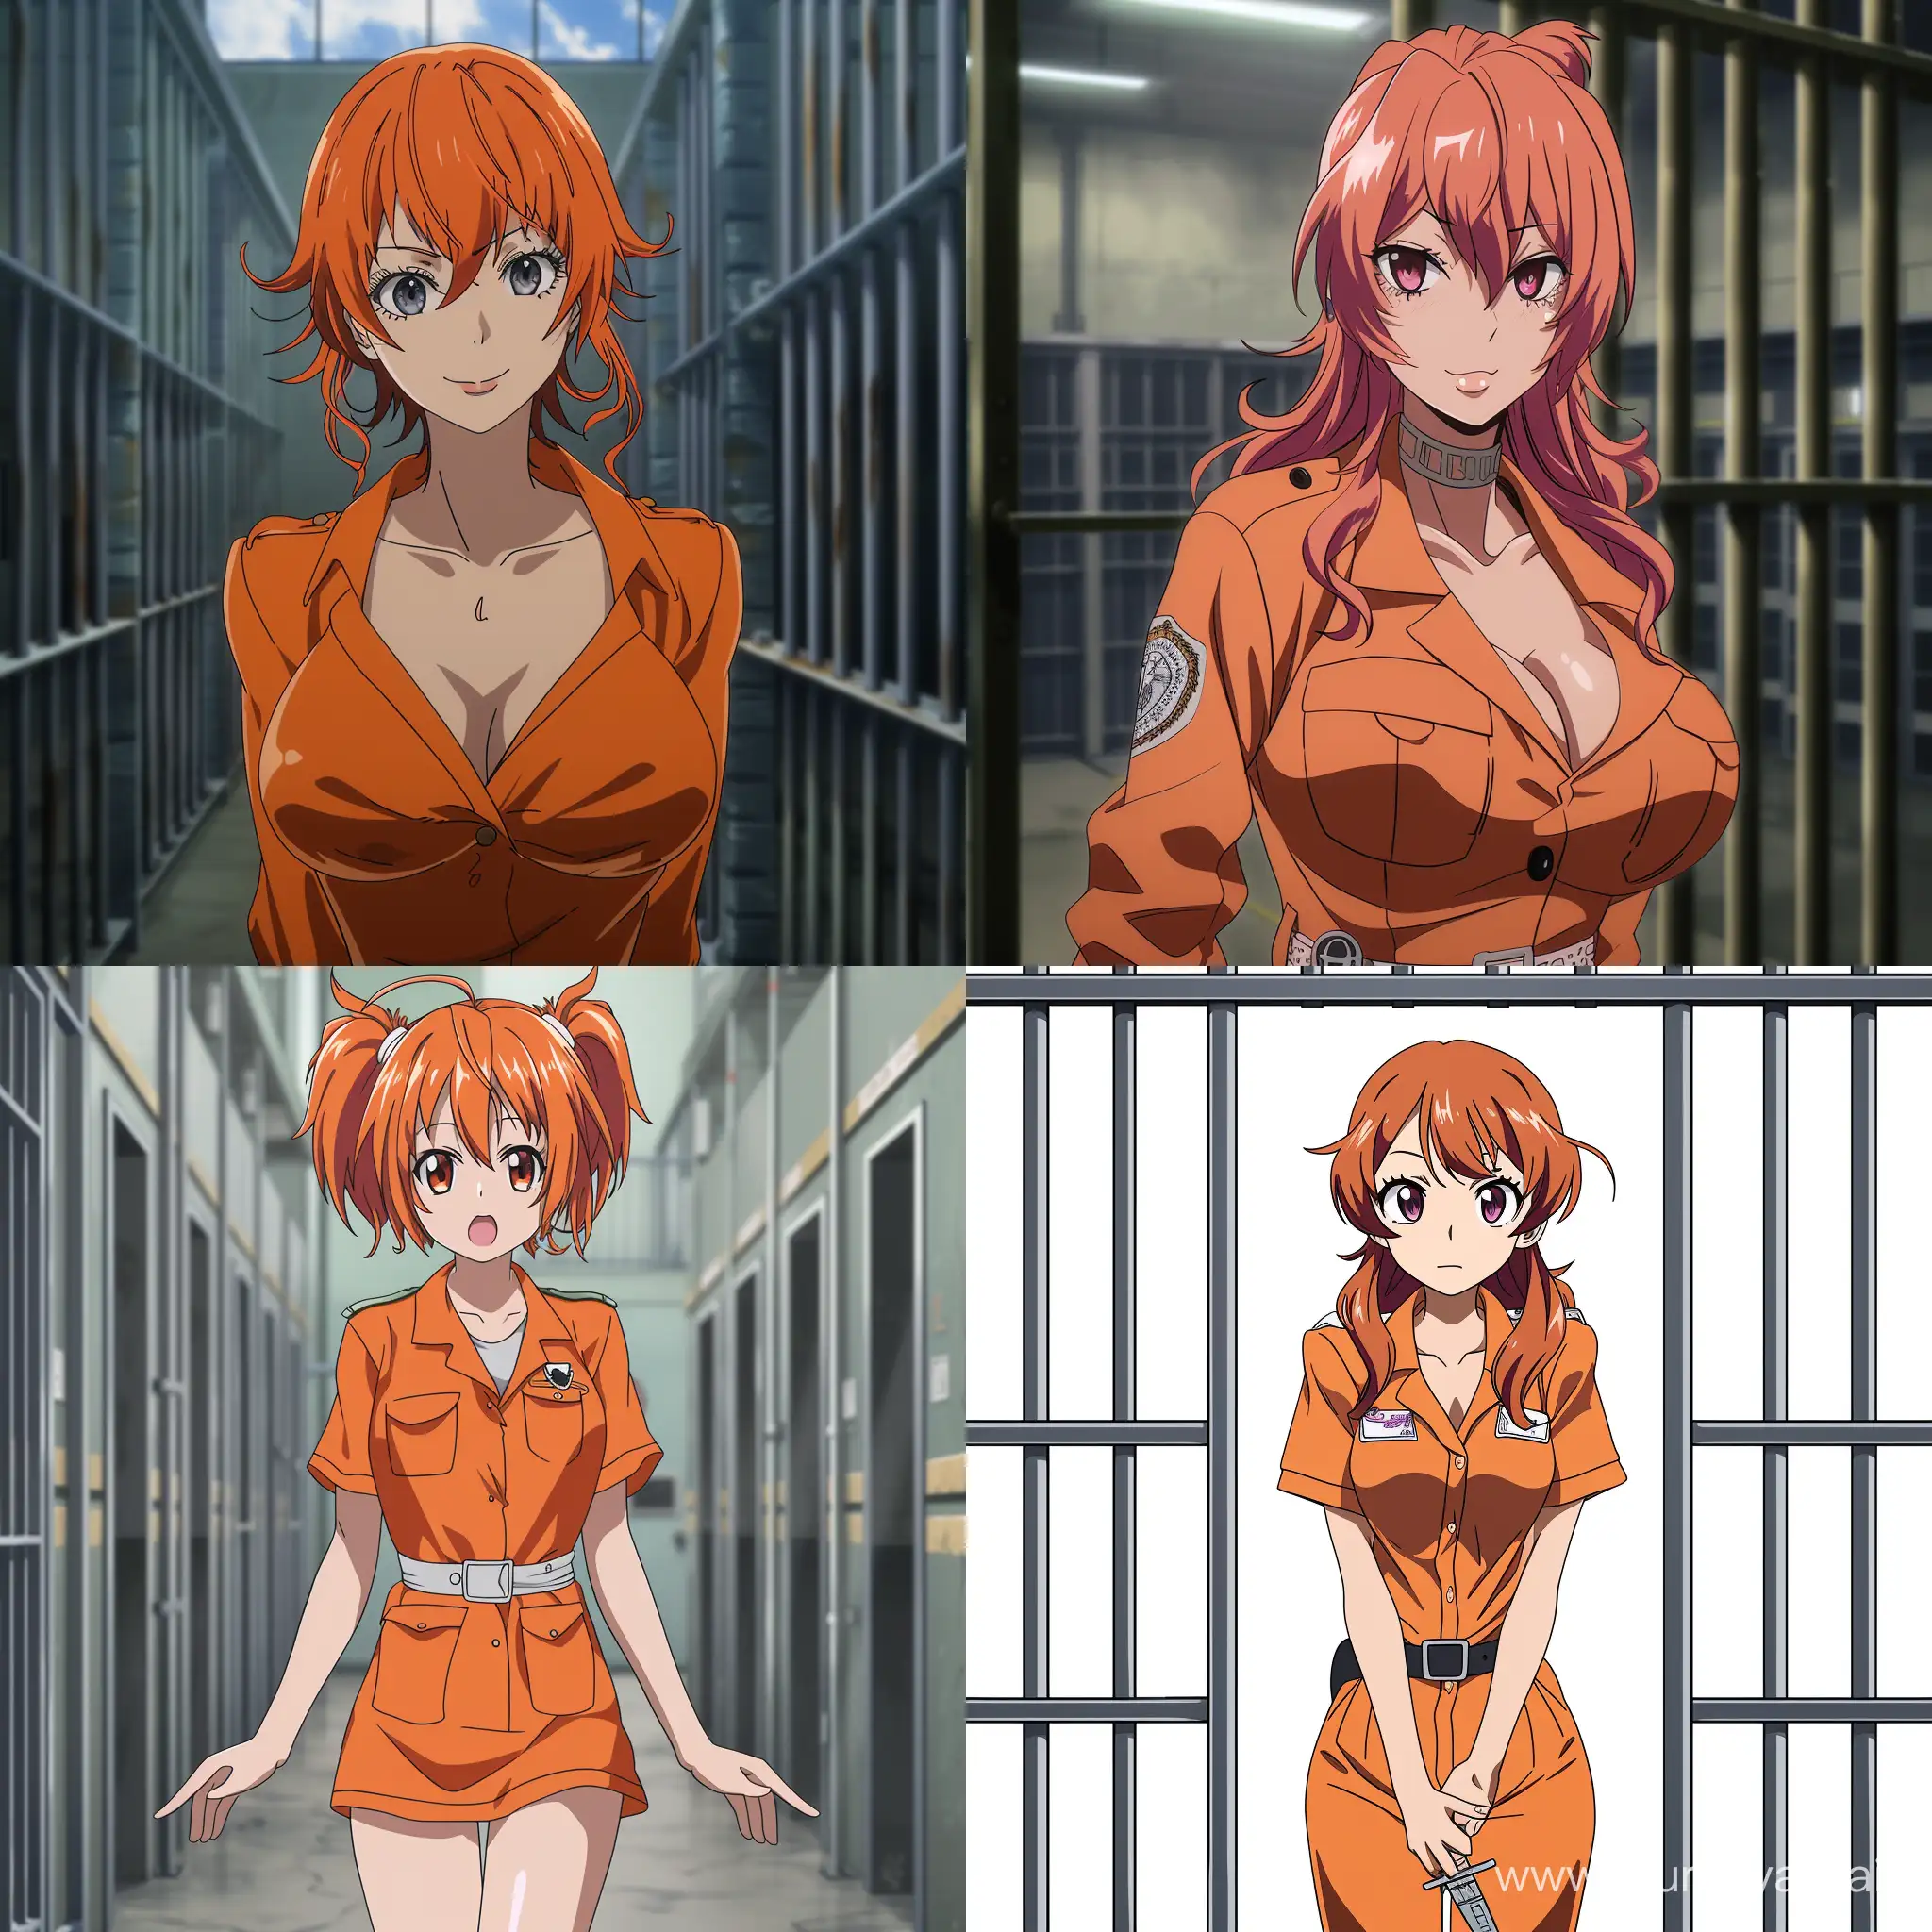 Nami-in-Prison-Uniform-Striking-Pose-with-Intense-Expression